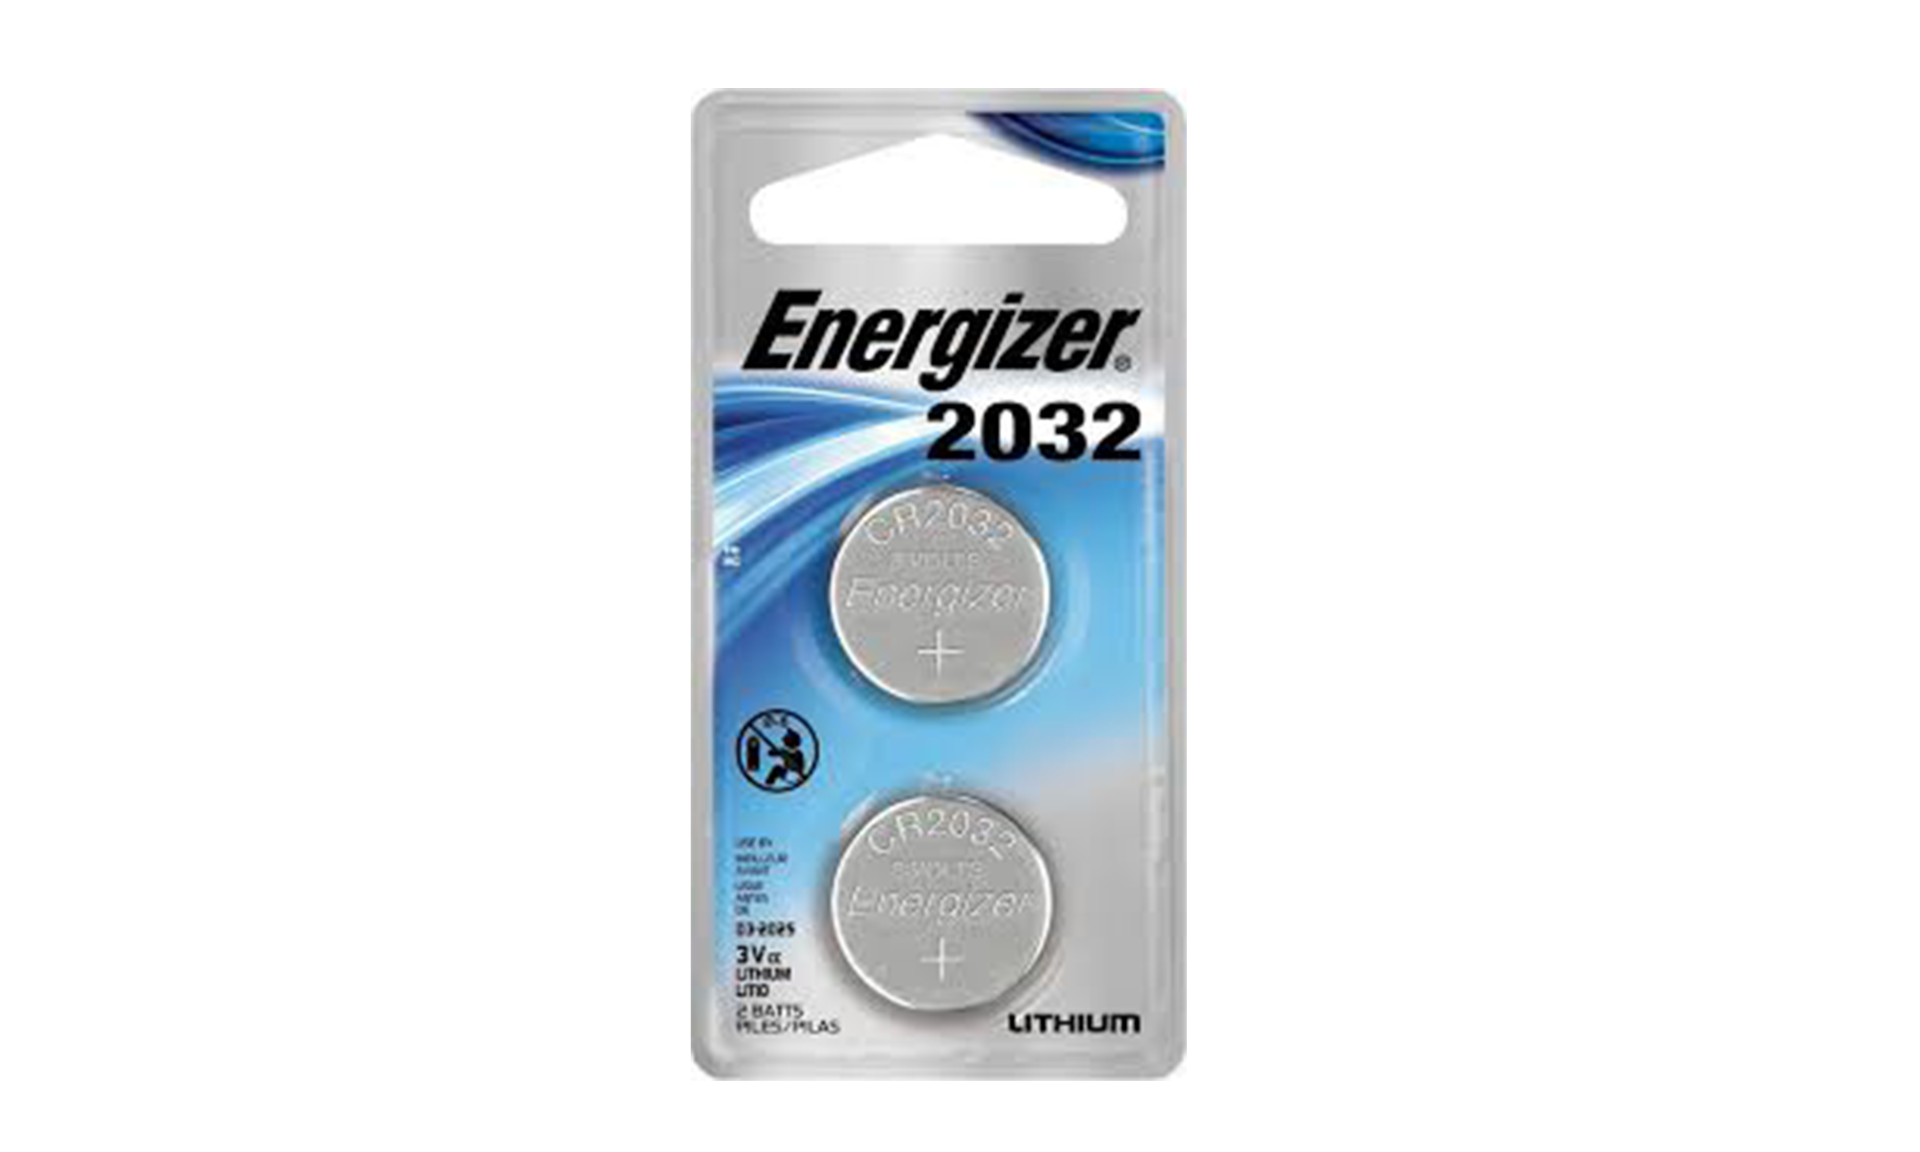 Energizer ECR2032 Battery 3V Lithium Coin Cell (2PC Blister Pack) (Child Resistant Packaging)